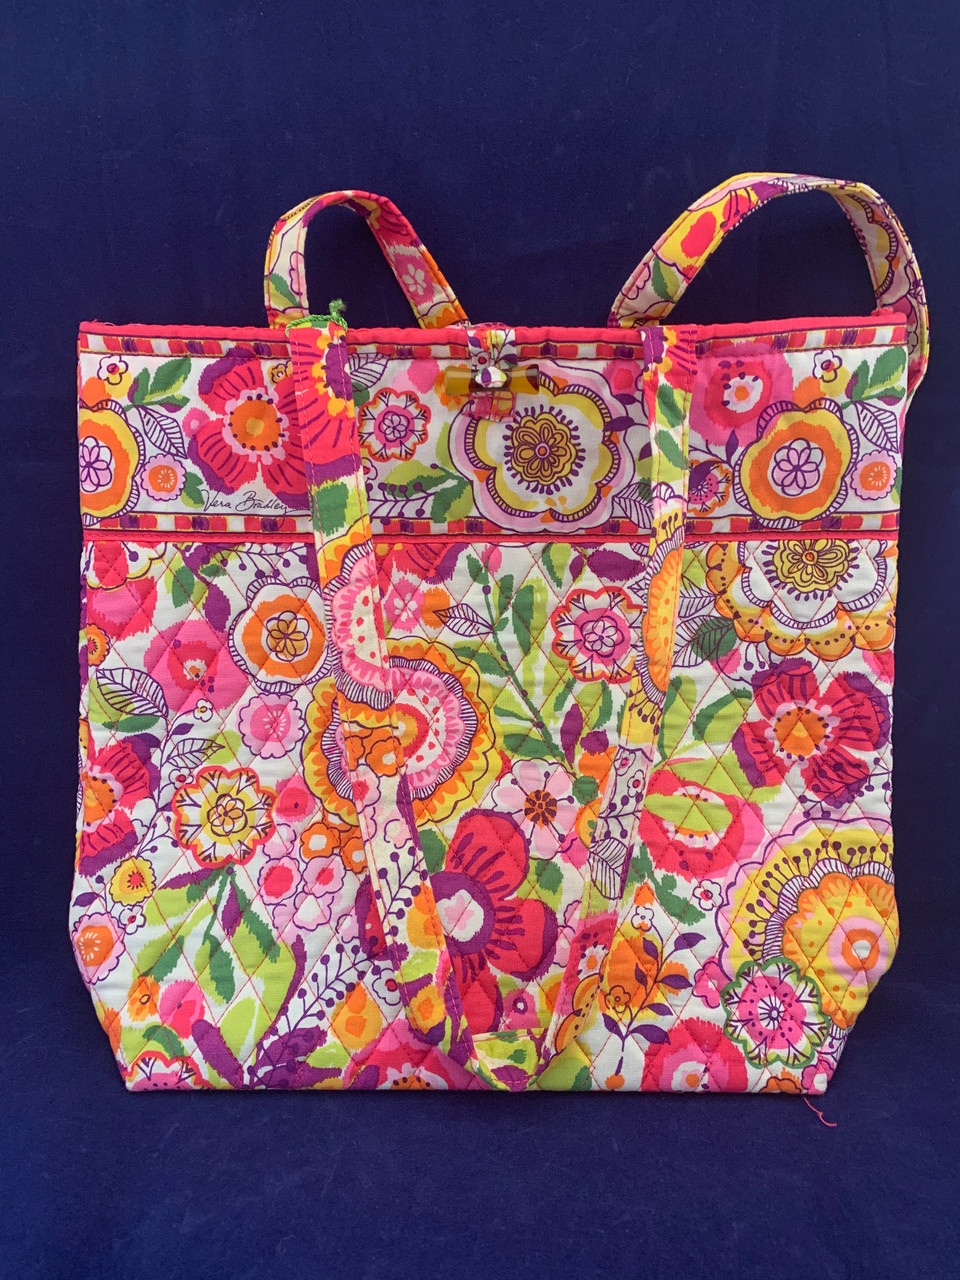 Vera Bradley Bags for sale in Trivandrum, India | Facebook Marketplace |  Facebook